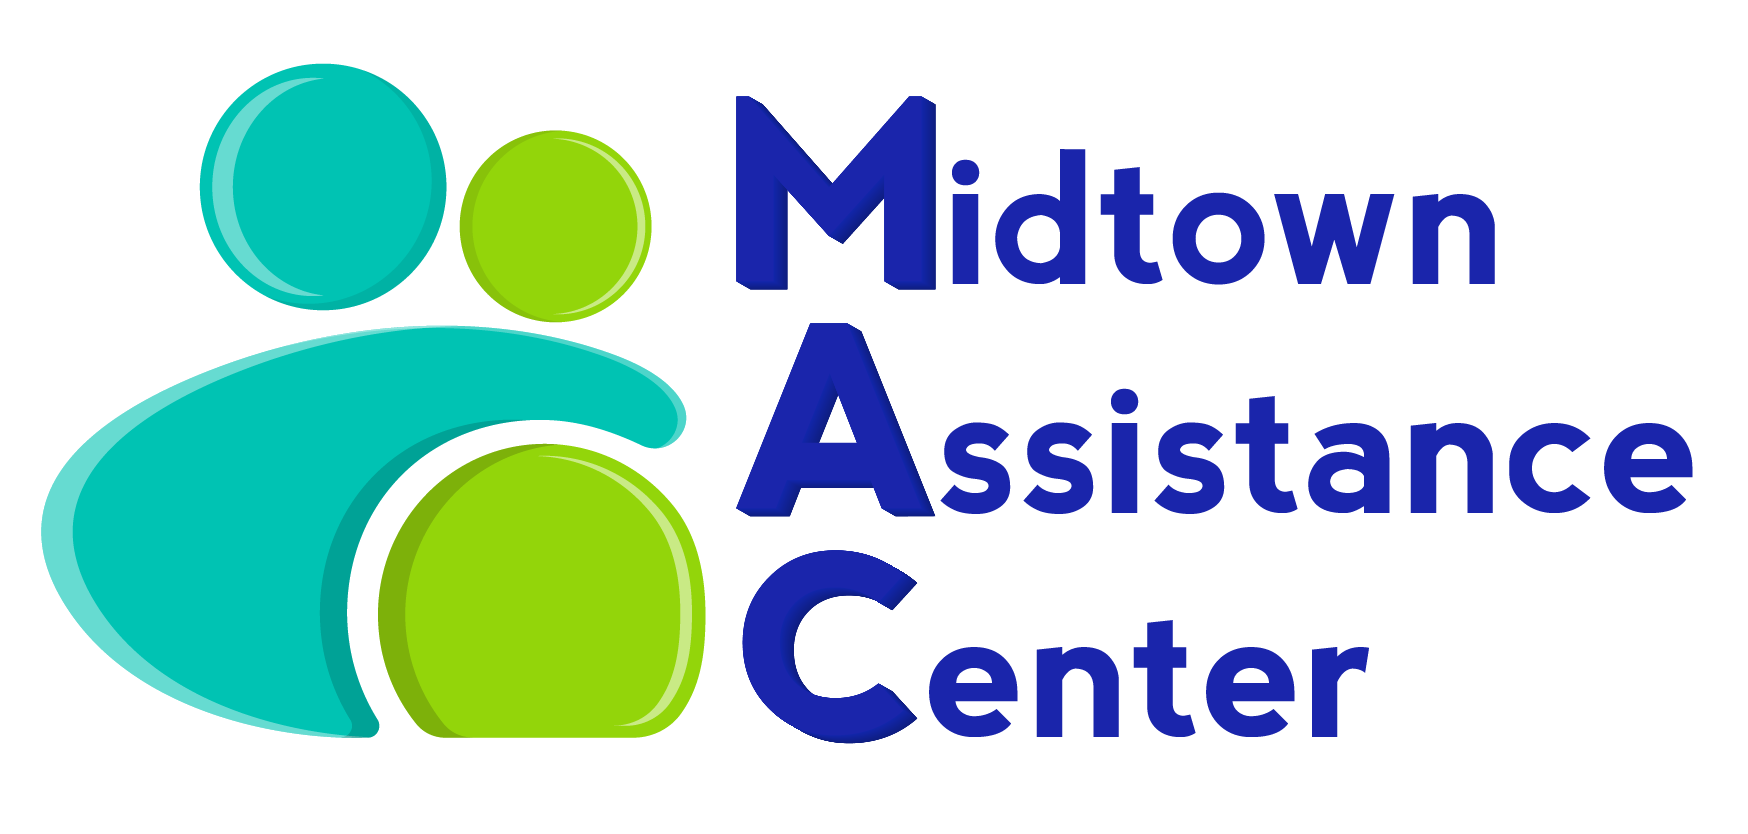 Midtown Assistance Center